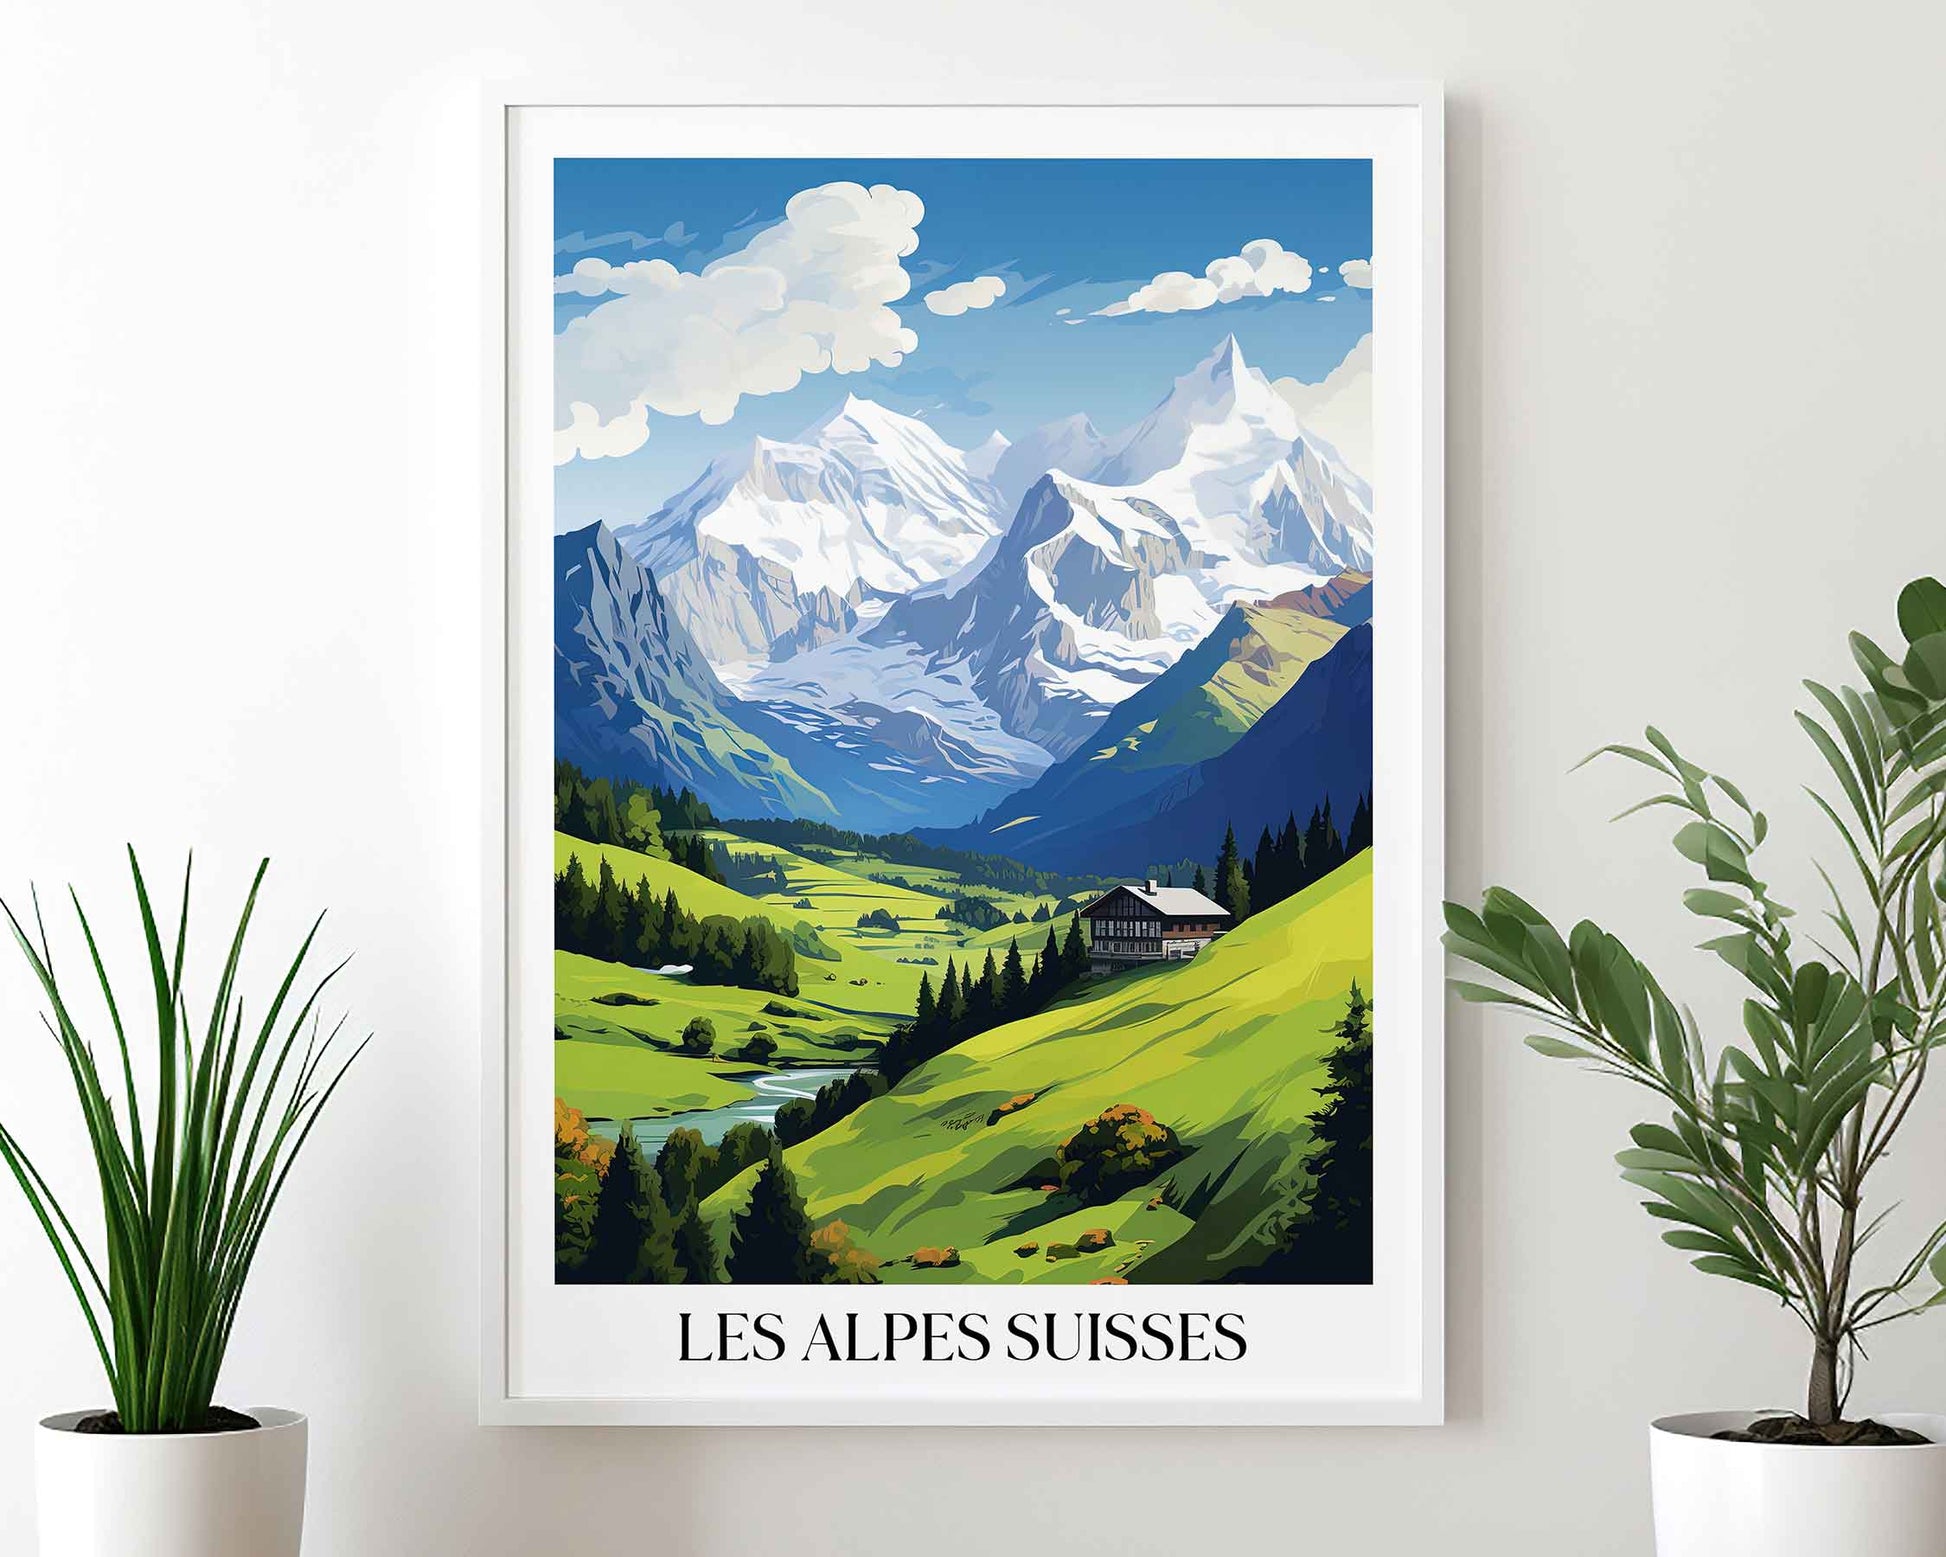 Framed Image of Swiss Alps Switzerland Wall Art Travel Poster Prints Illustration